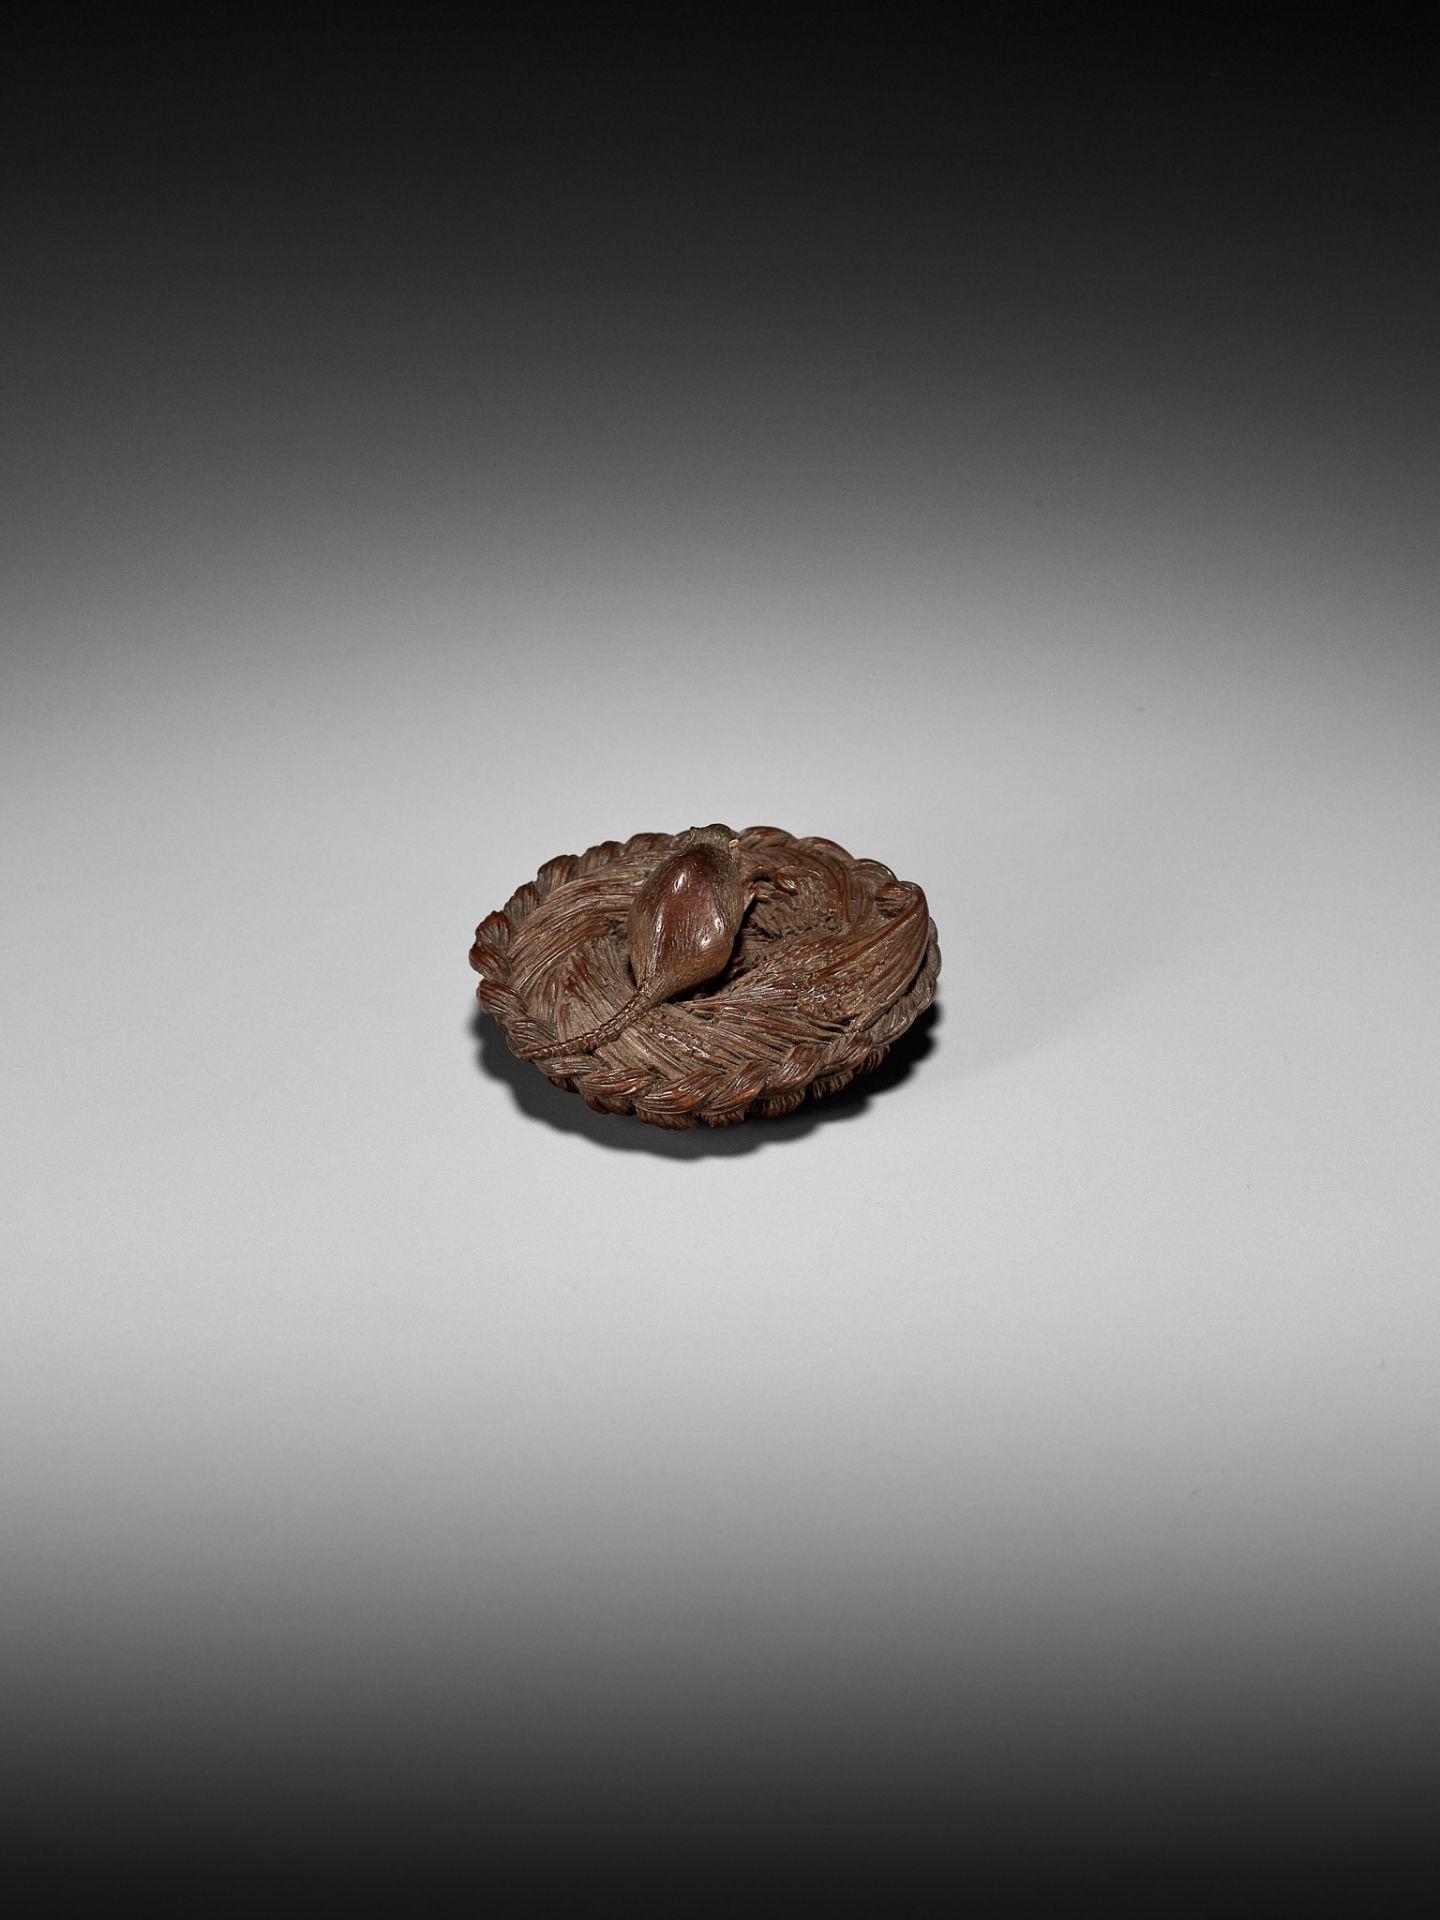 MORITA SOKO: A SUPERB SMALL WOOD NETSUKE OF A RAT ON A STRAW RICE BALE - Image 7 of 17